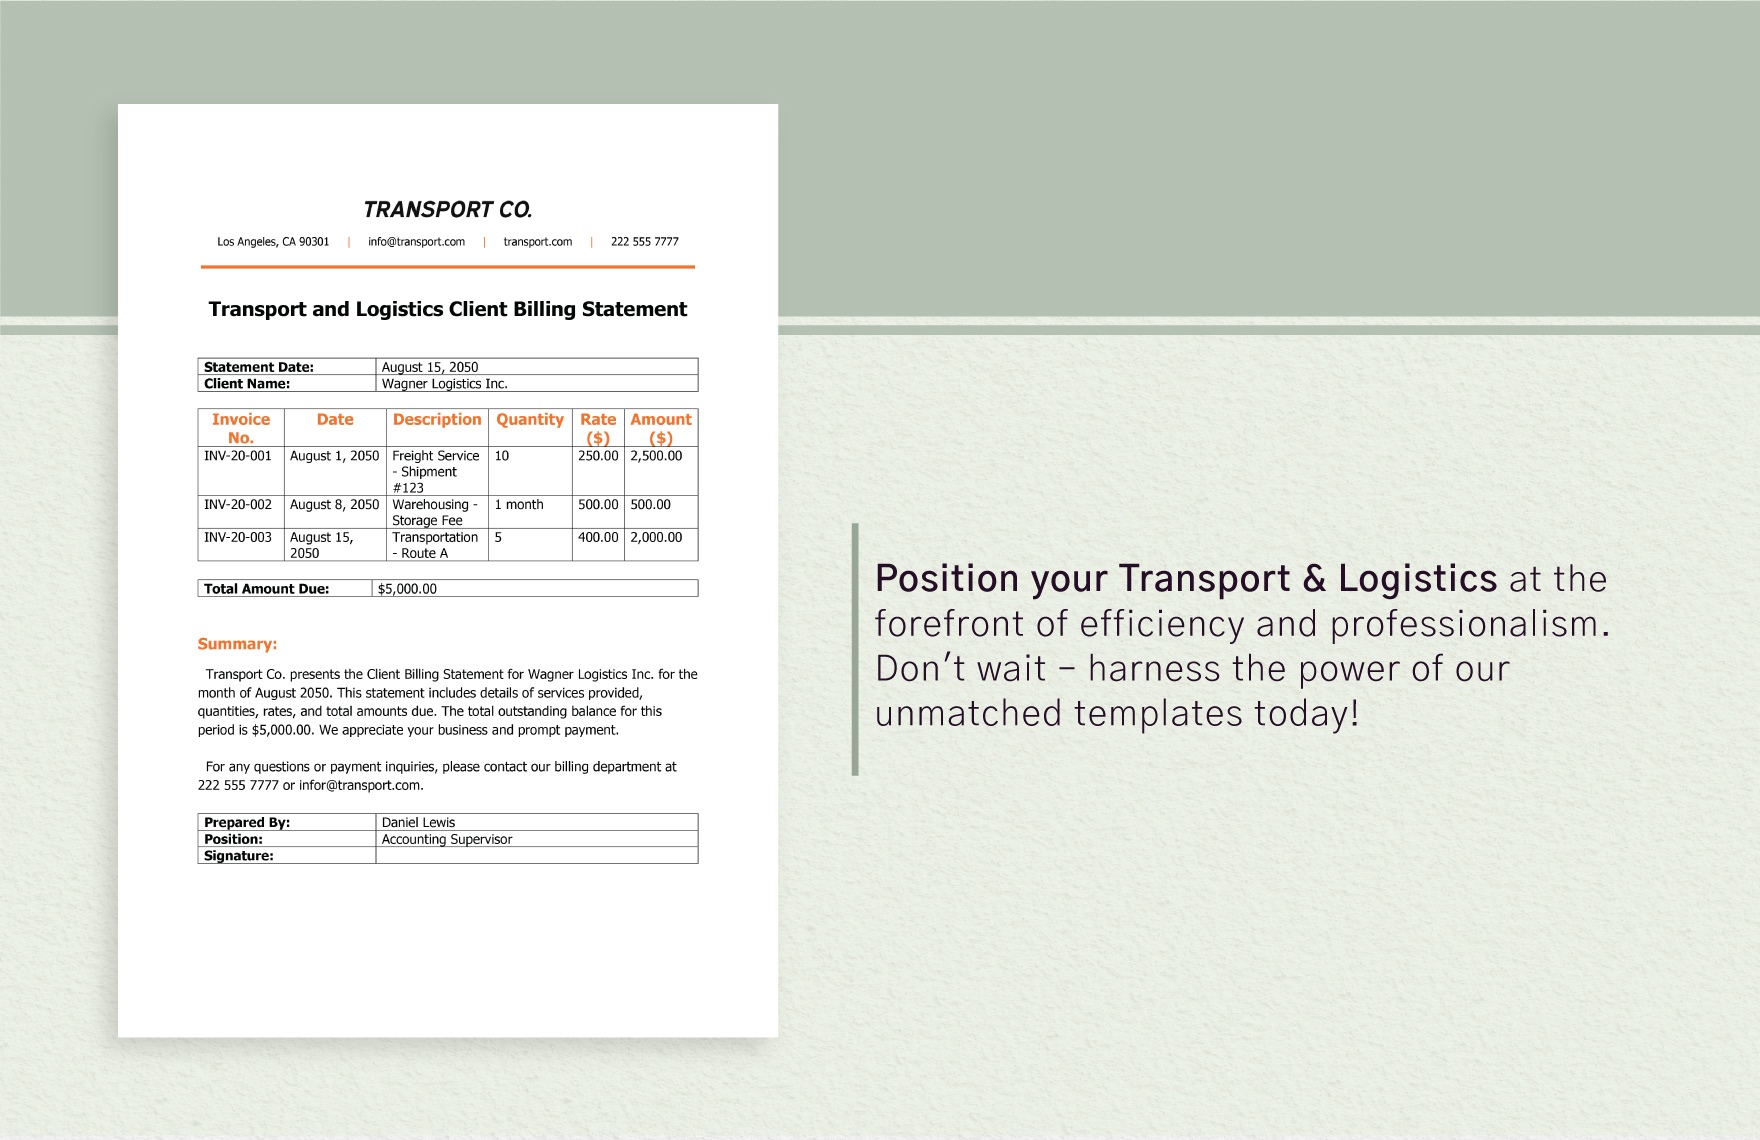 Transport and Logistics Client Billing Statement Template